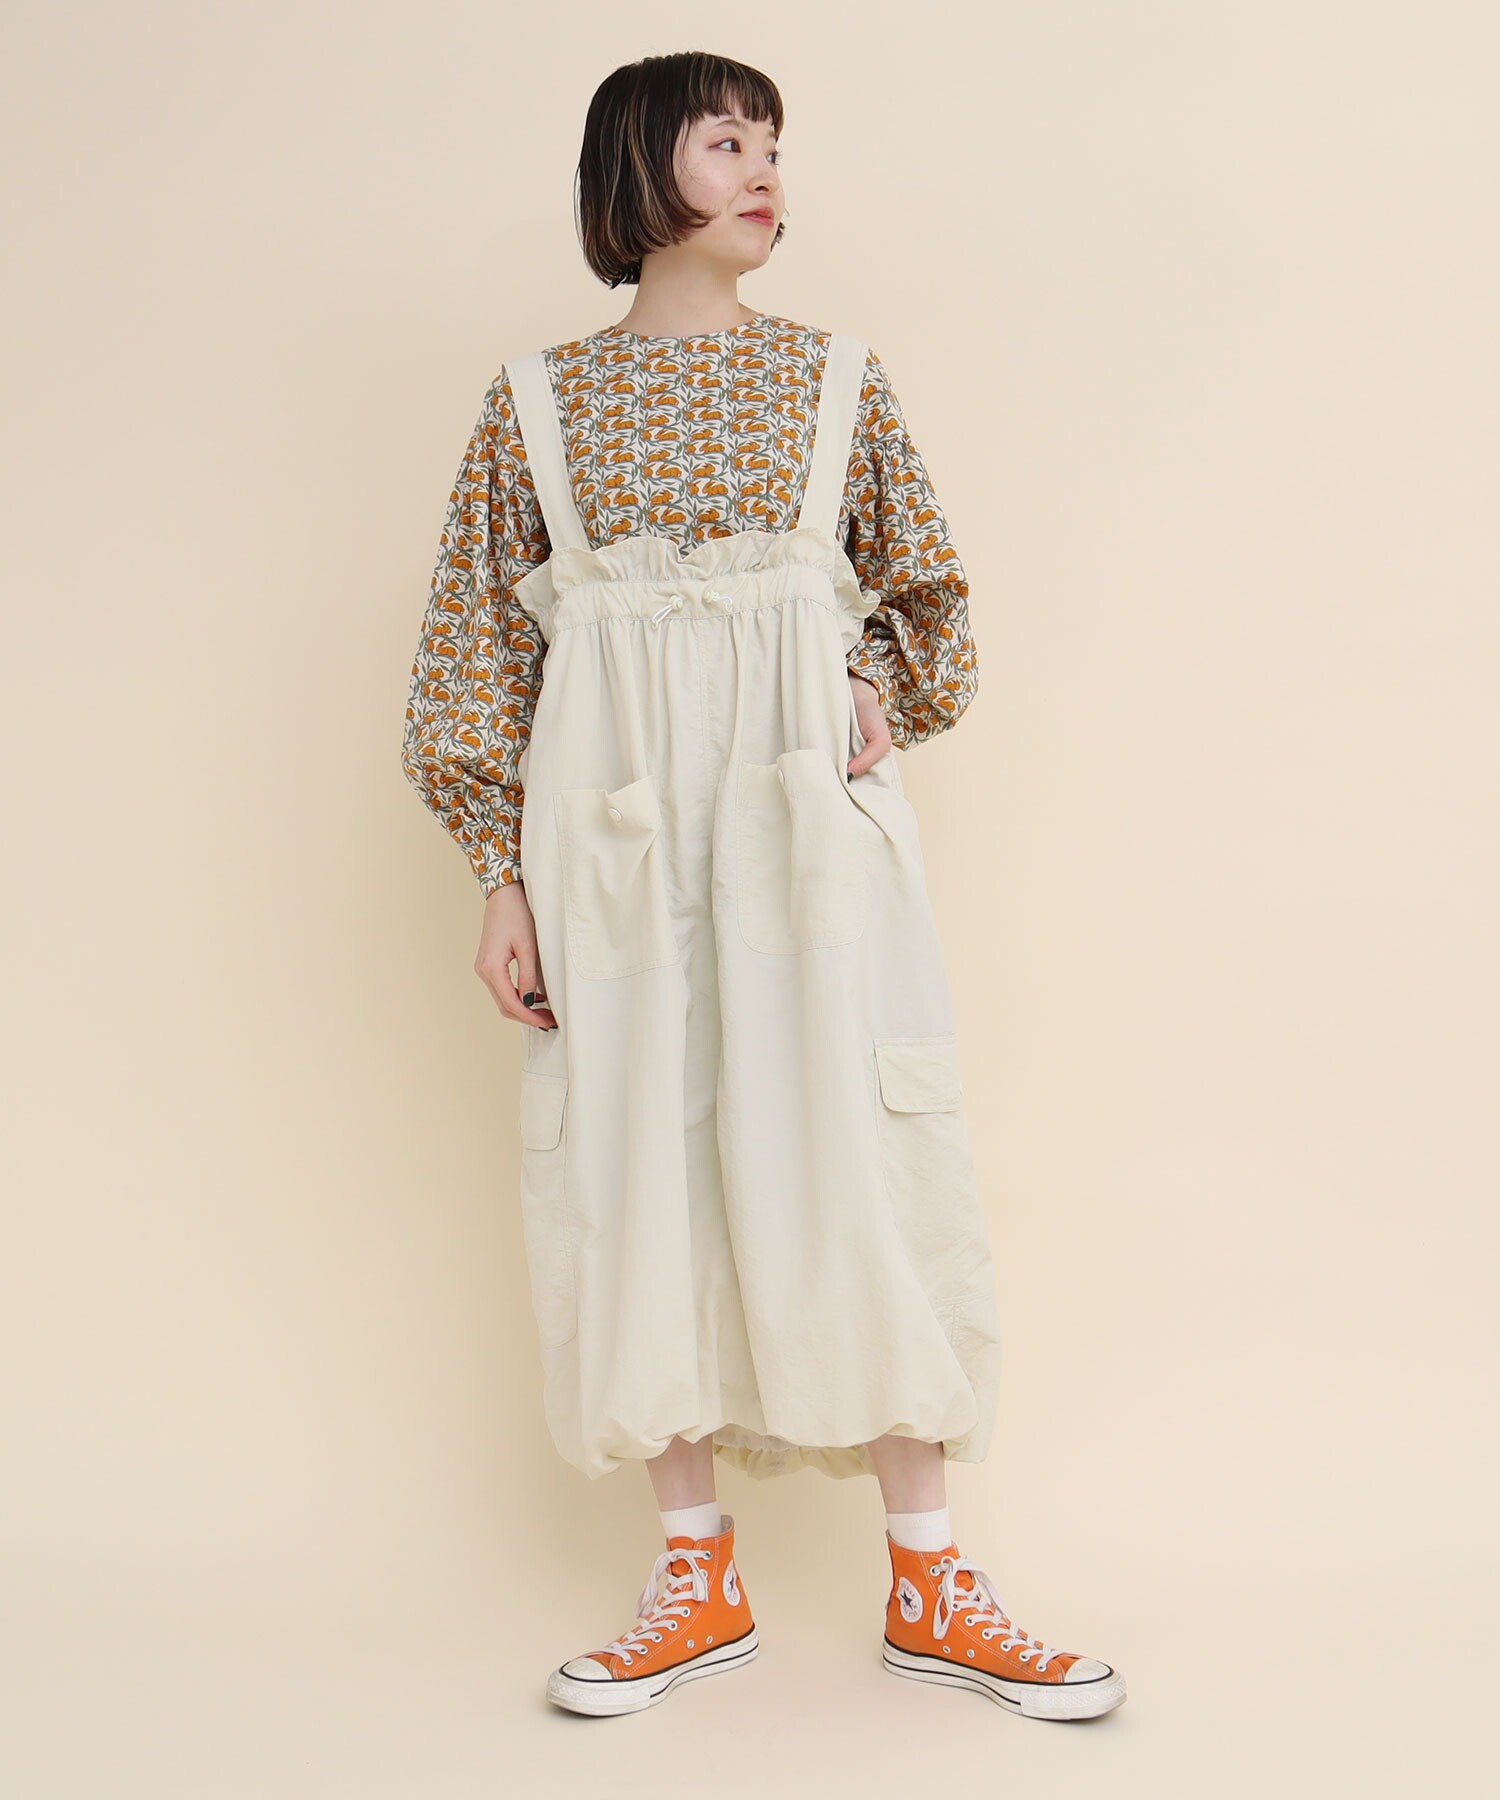 AMBIDEX Store ○NYLON pocket jumper Skirt(F キナリ): l'atelier du